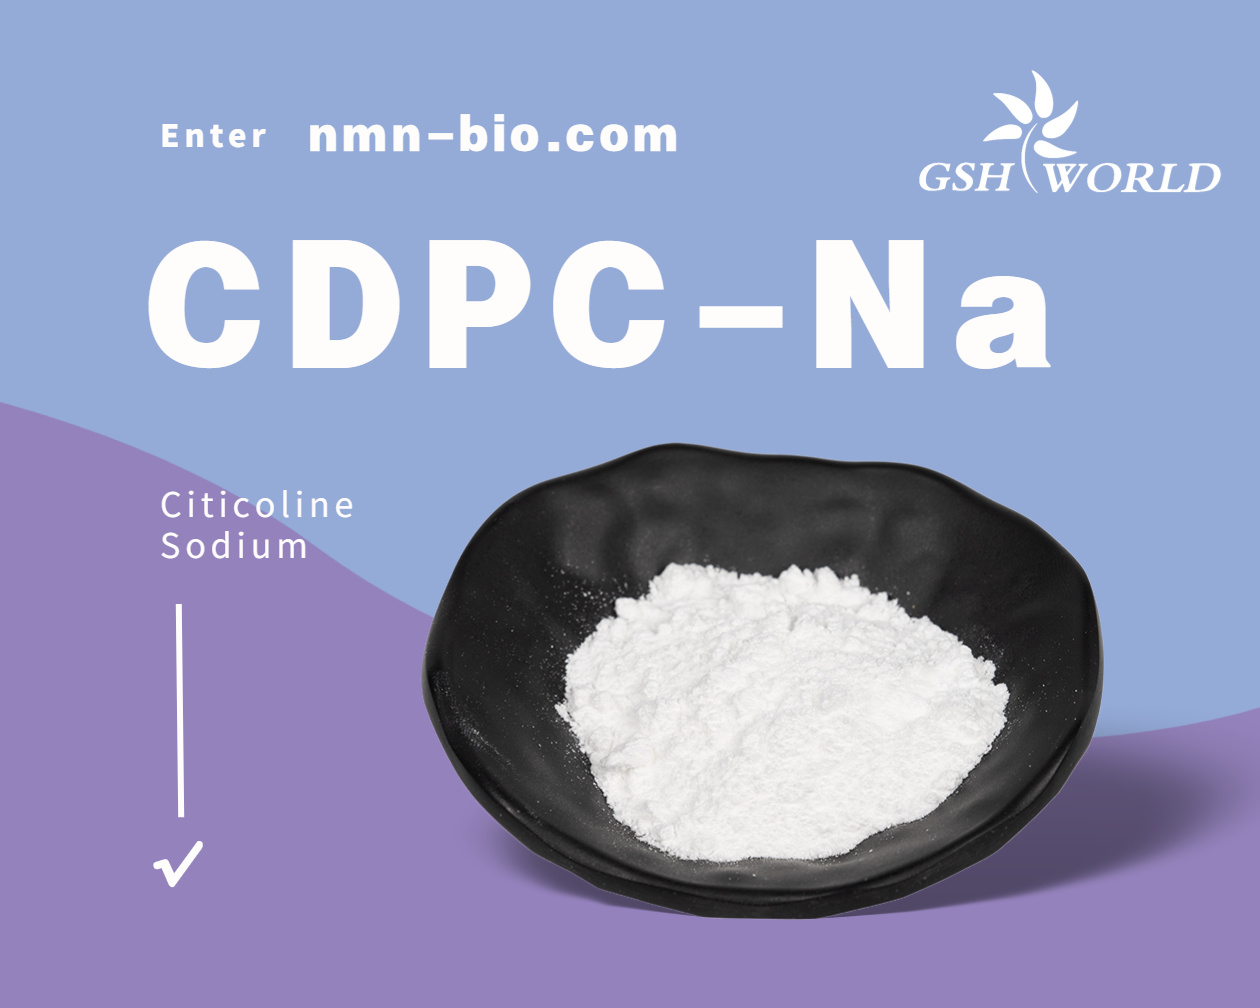 USP Grade 98% Purity API Powder CAS 33818-15-4 Cdpc-Na Citicoline Sodium suppliers & manufacturers in China